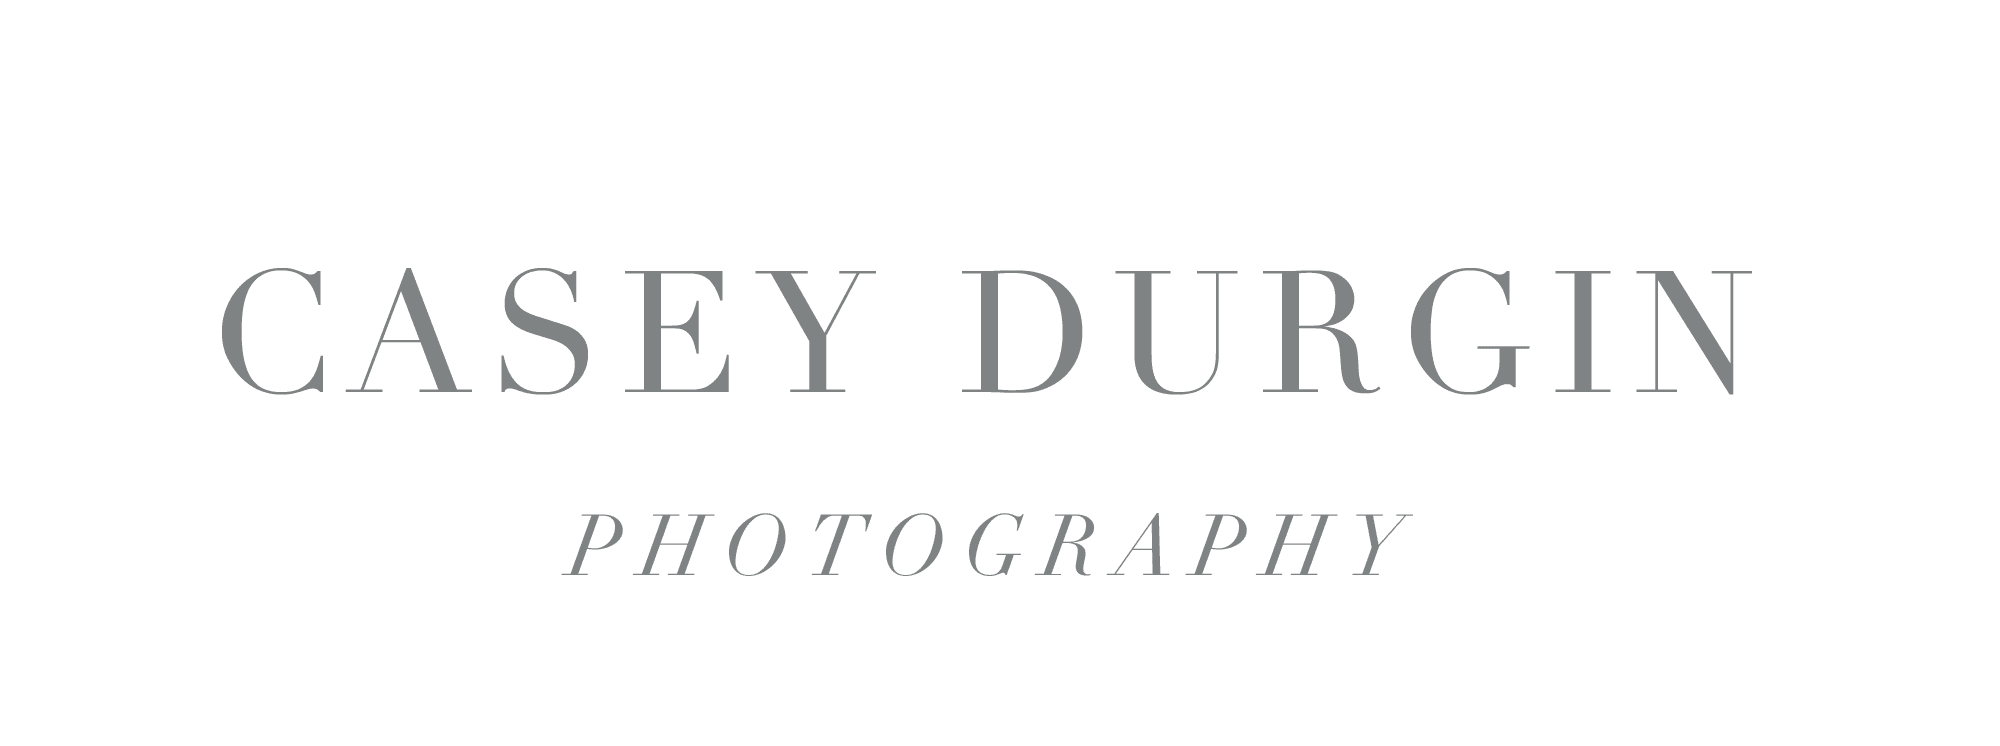 Luxury Wedding Photographer Casey Durgin Photography Logo